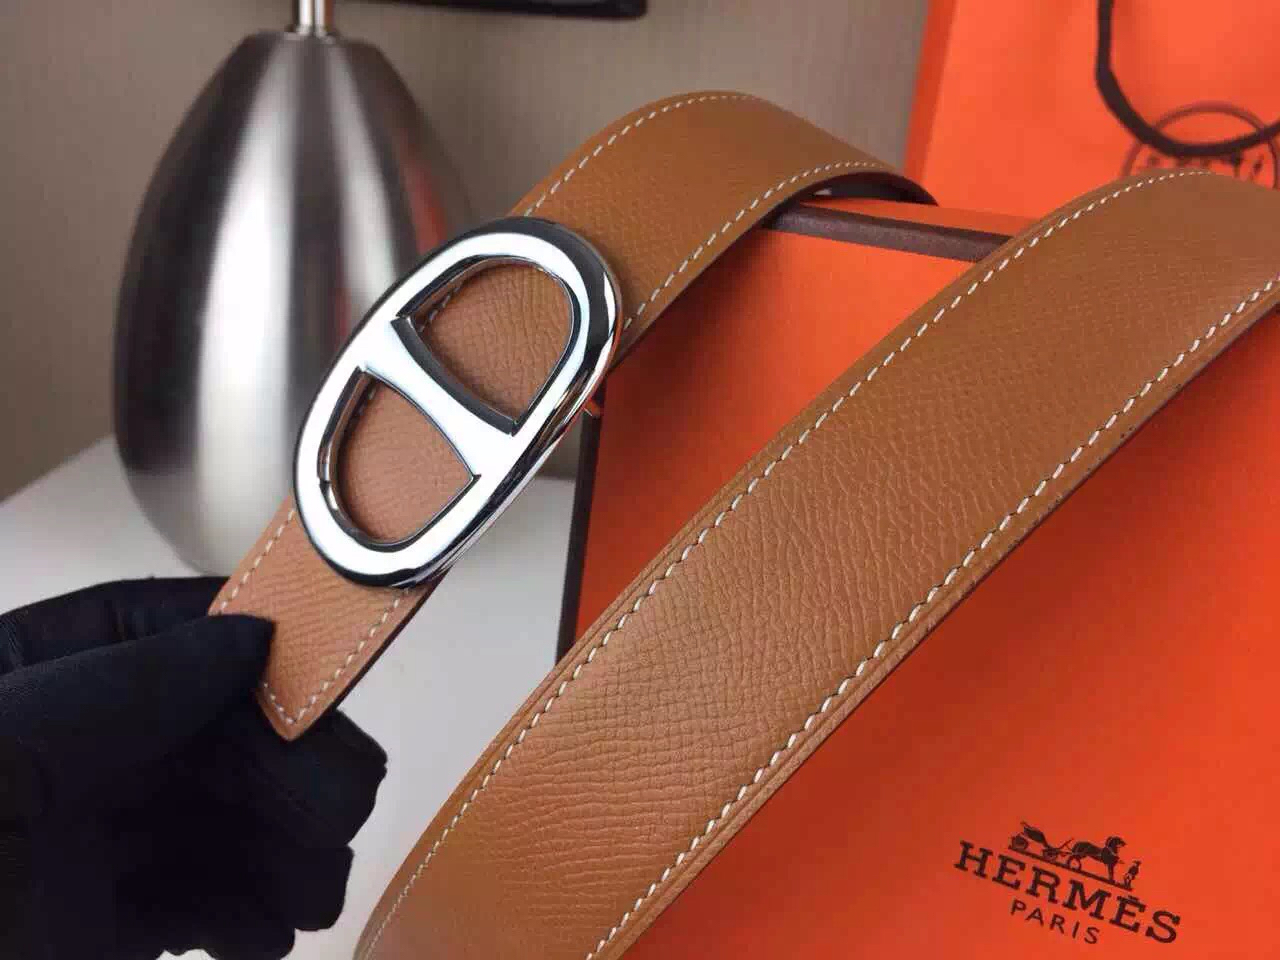 Hermes爱马仕皮带货源 扣头设计新颖 棕色掌纹